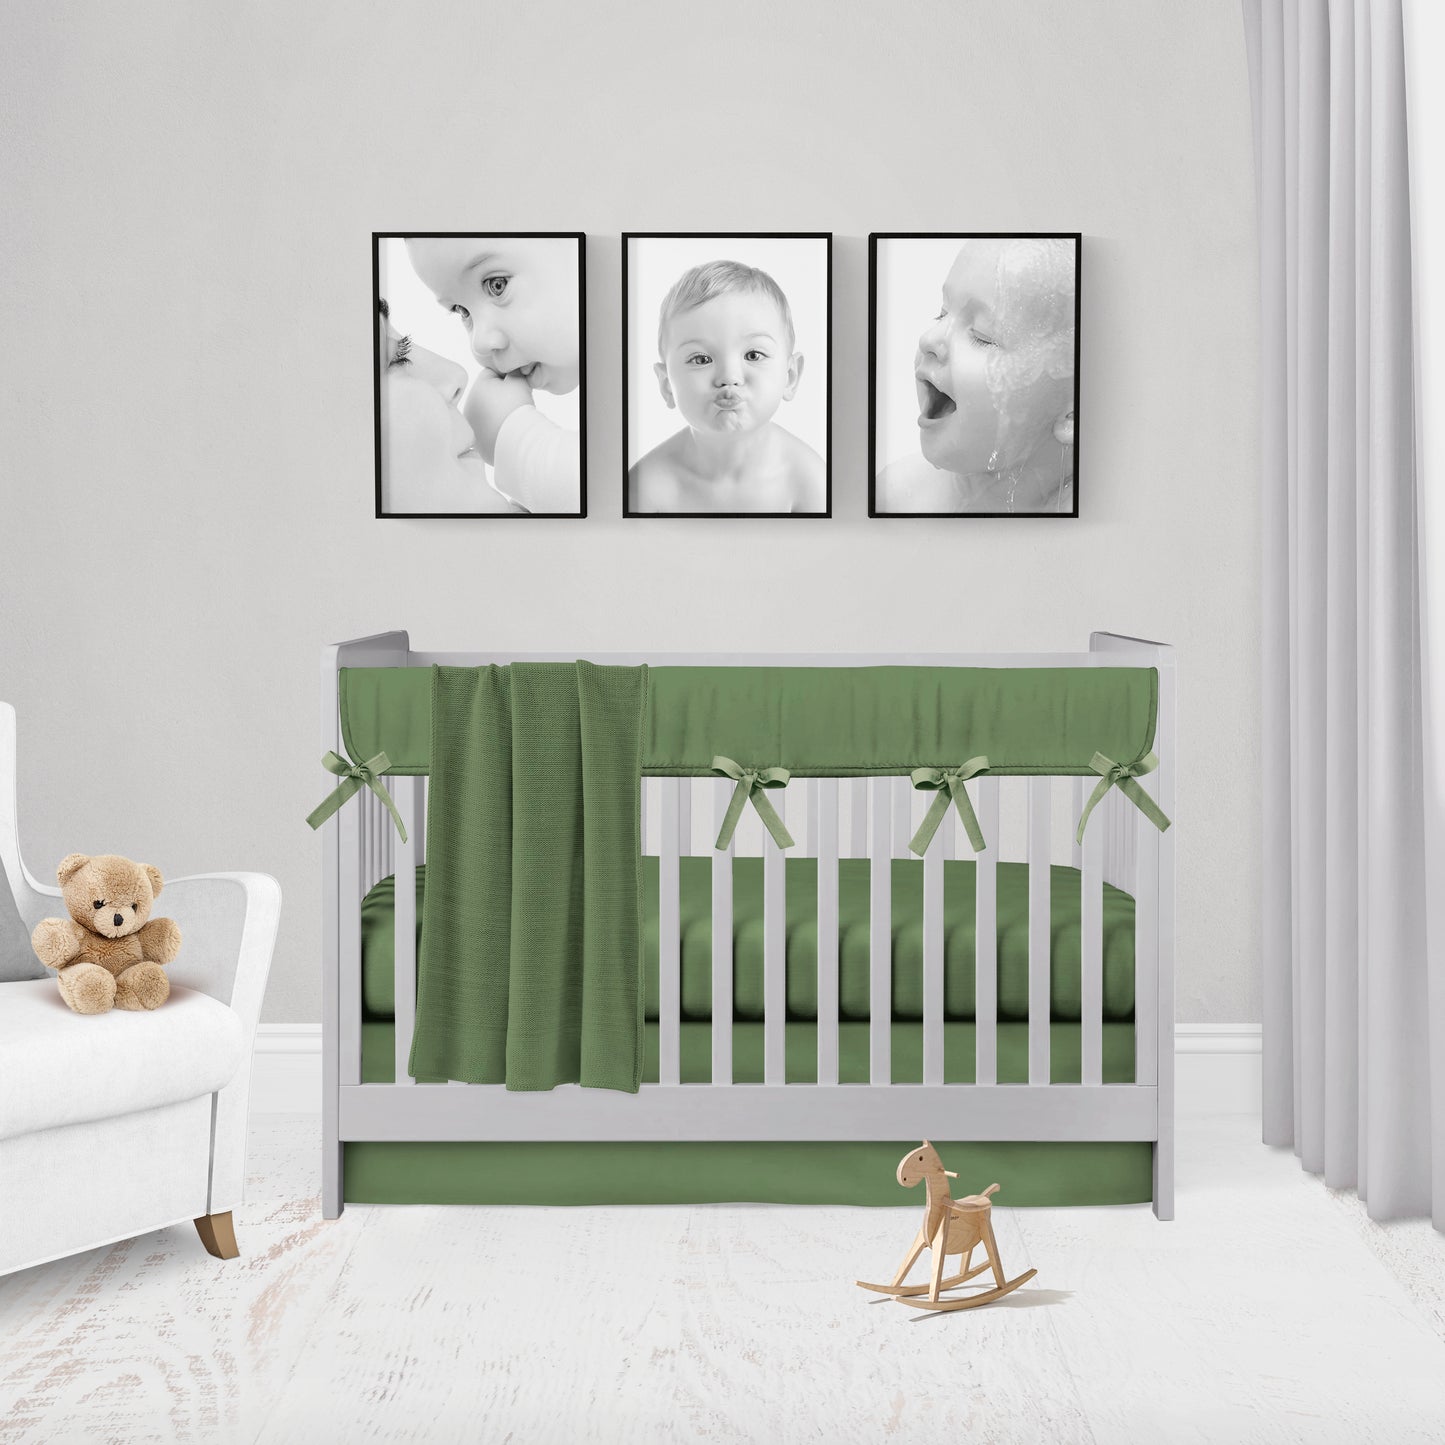 pine green crib rail cover, crib sheet, crib skirt and blanket